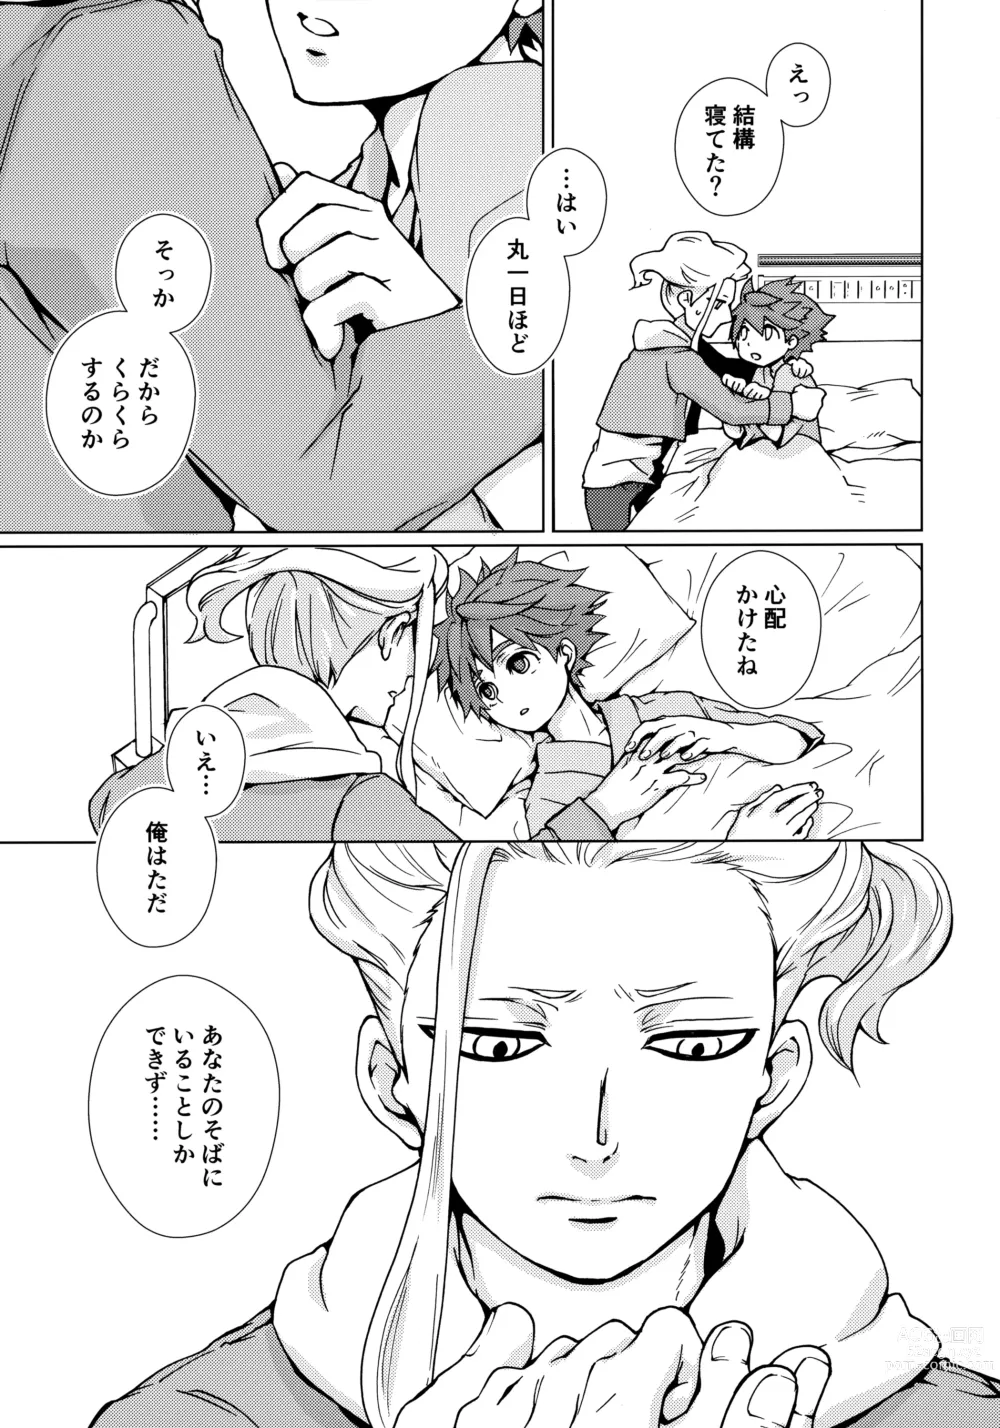 Page 14 of doujinshi Ryuusei wo Tsukamaete